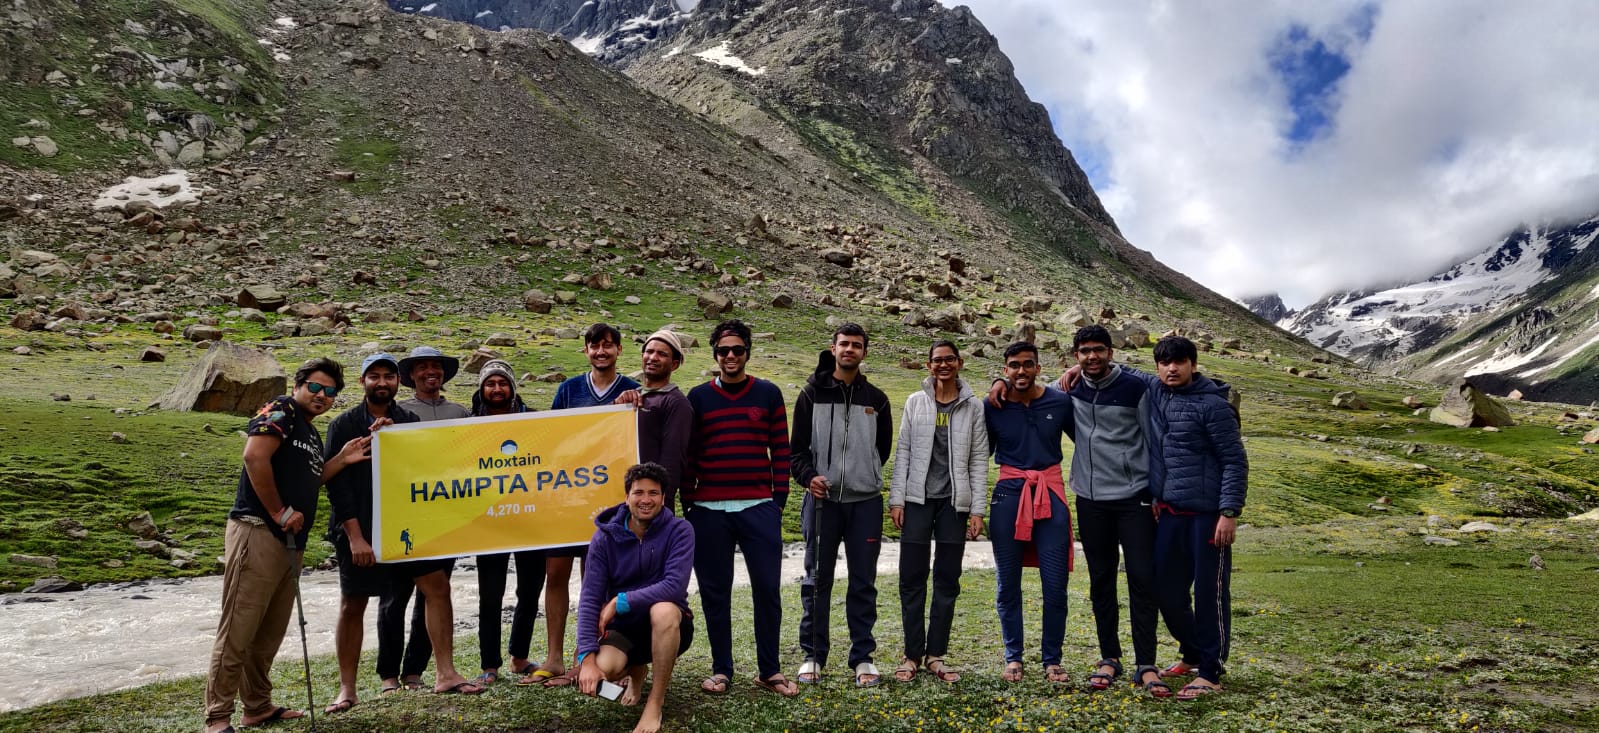 hampta pass trek group with moxtain